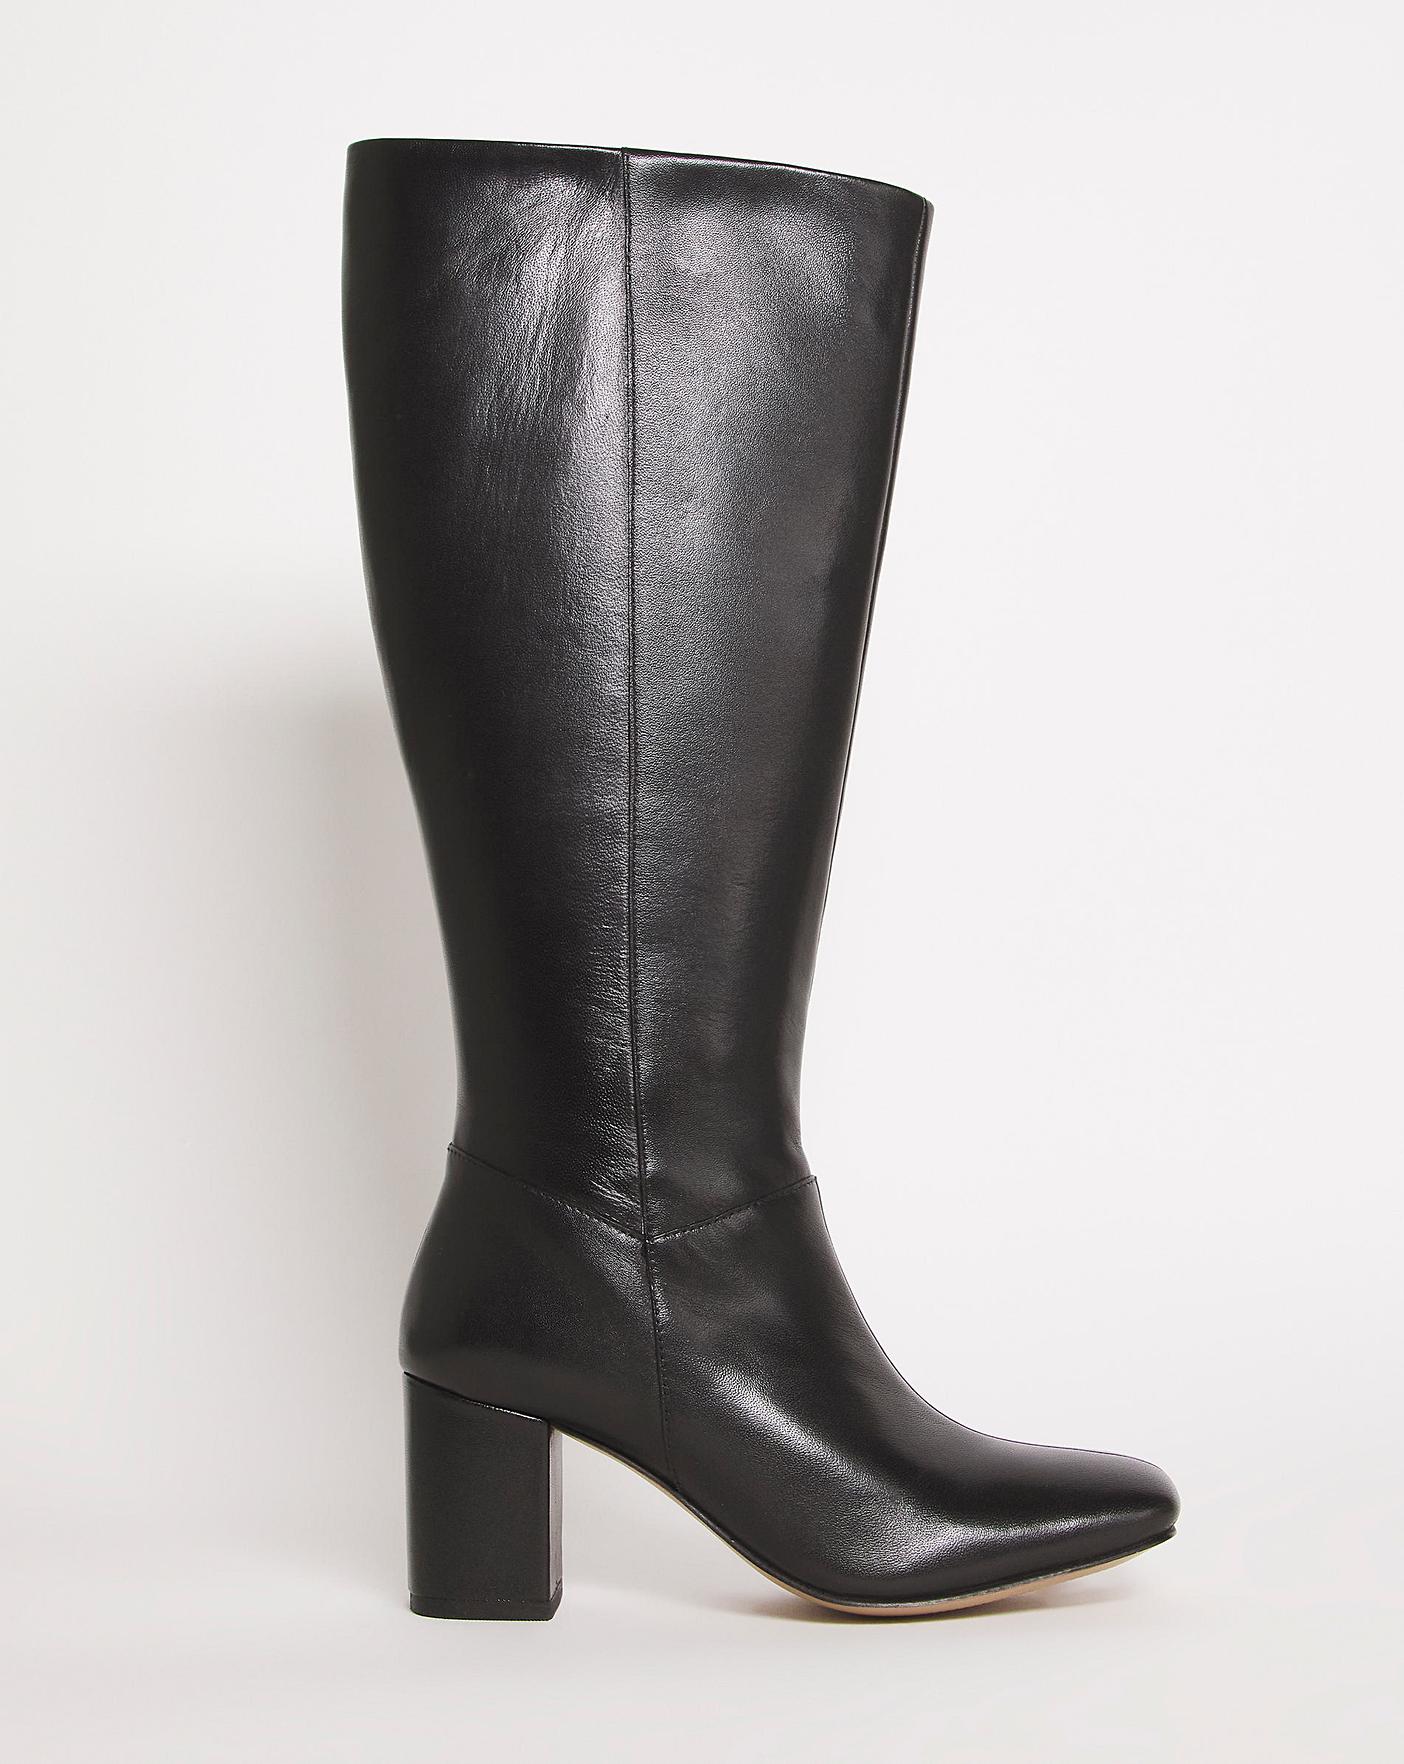 Leather High Leg Boot E Fit Curvy Calf | J D Williams